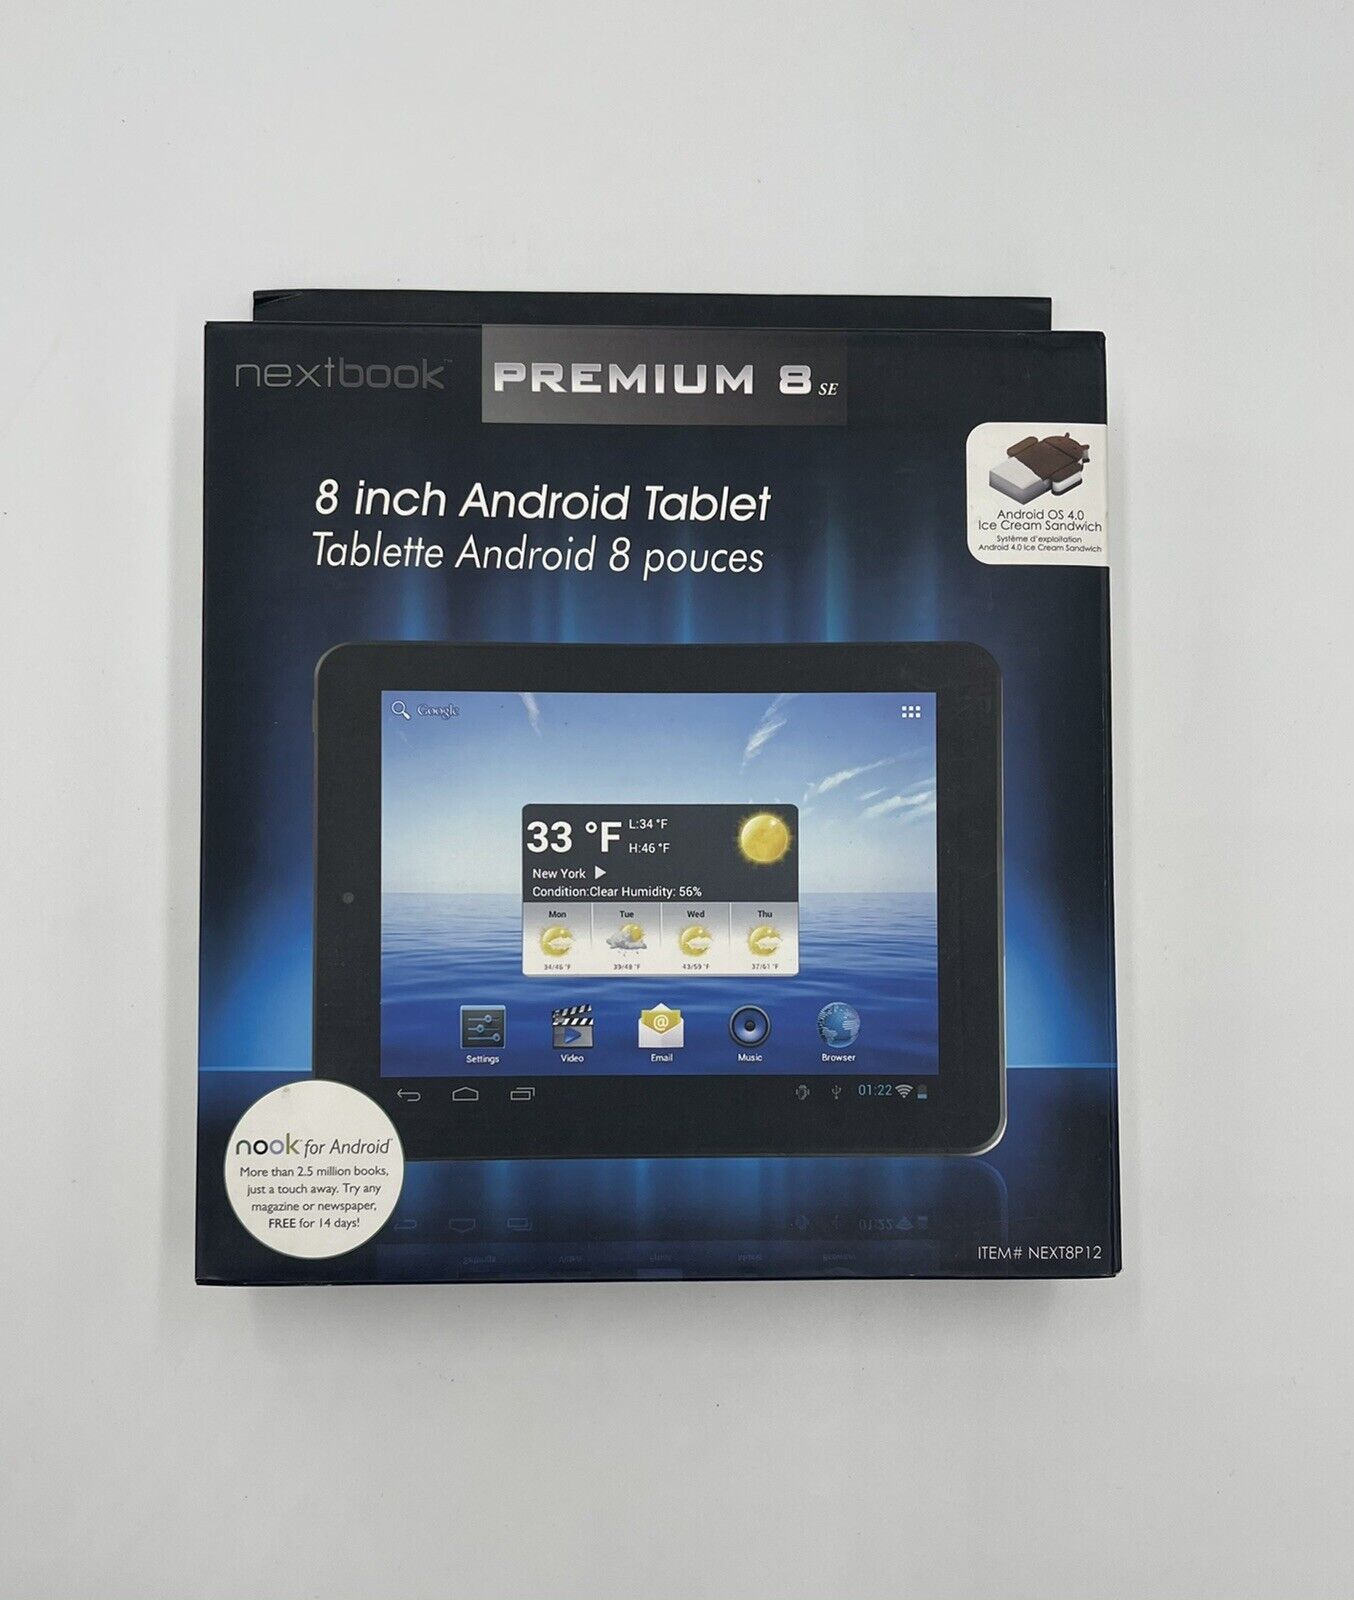 NEW Nextbook Premium 8 SE, 4GB TABLET, 8" Android Tablet #NEXT8P12